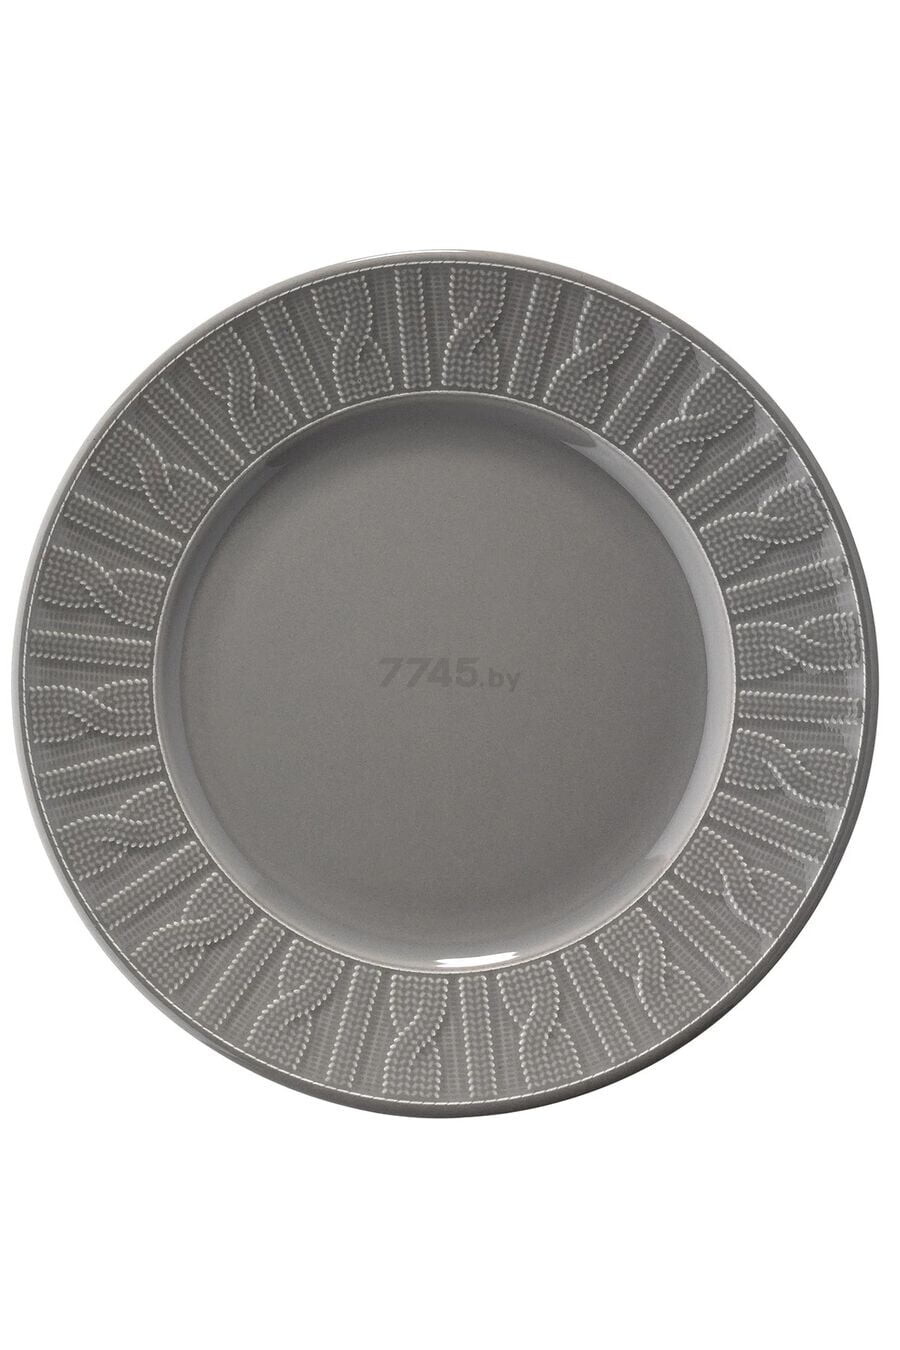 Набор посуды KUTAHYA Selanik 24 предмета серый (8697828864710) - Фото 4